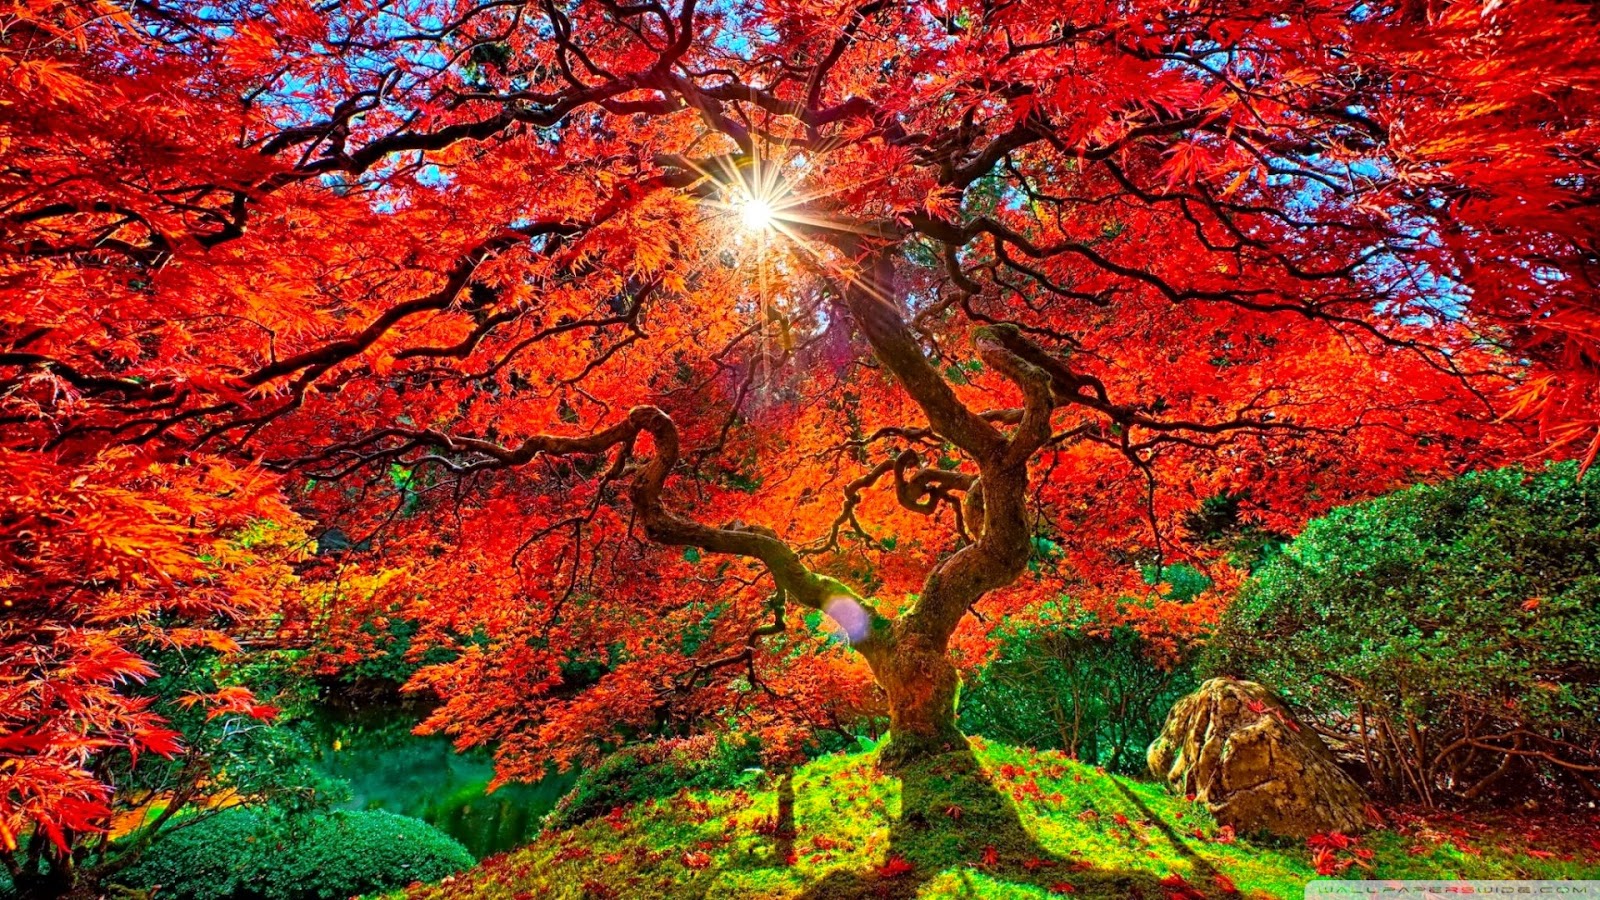 autumn nature wallpaper,natural landscape,nature,tree,leaf,red